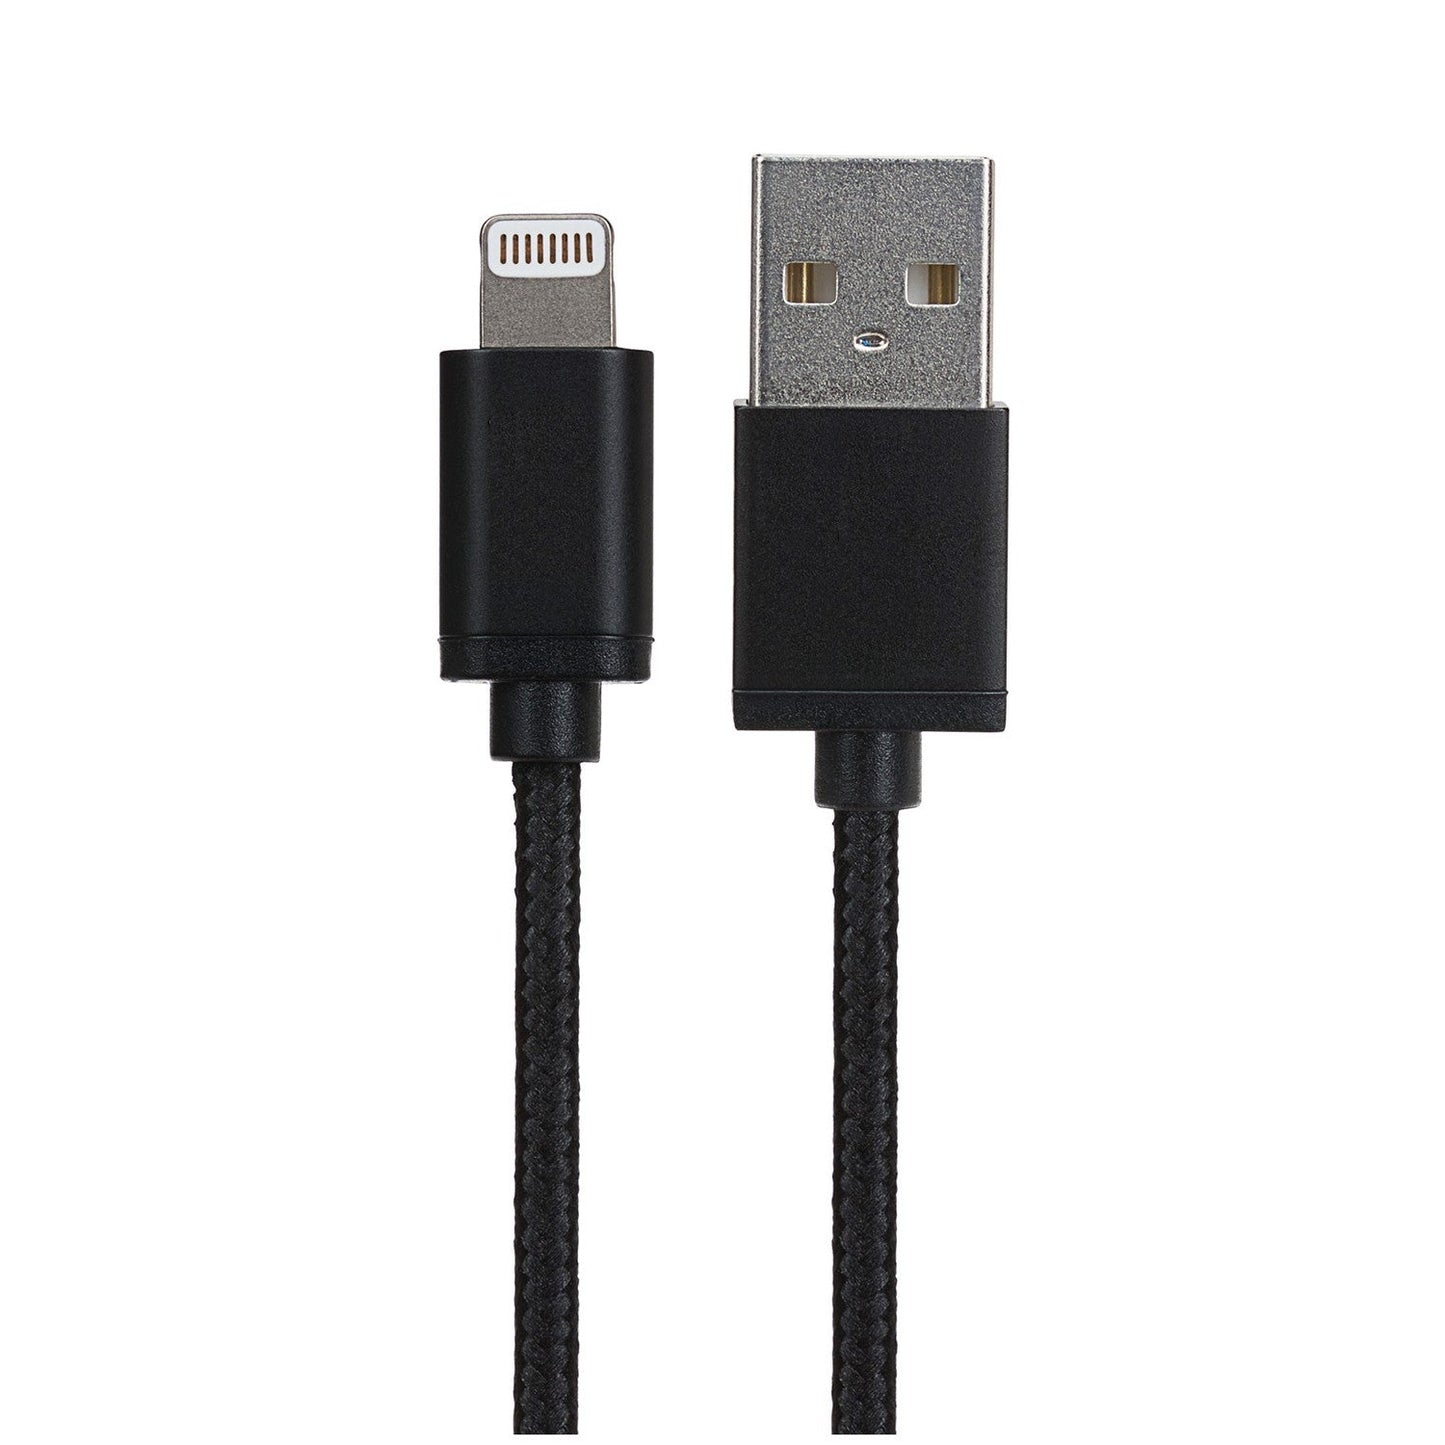 Maplin Lightning to USB-A Cable - Black, 1m - maplin.co.uk